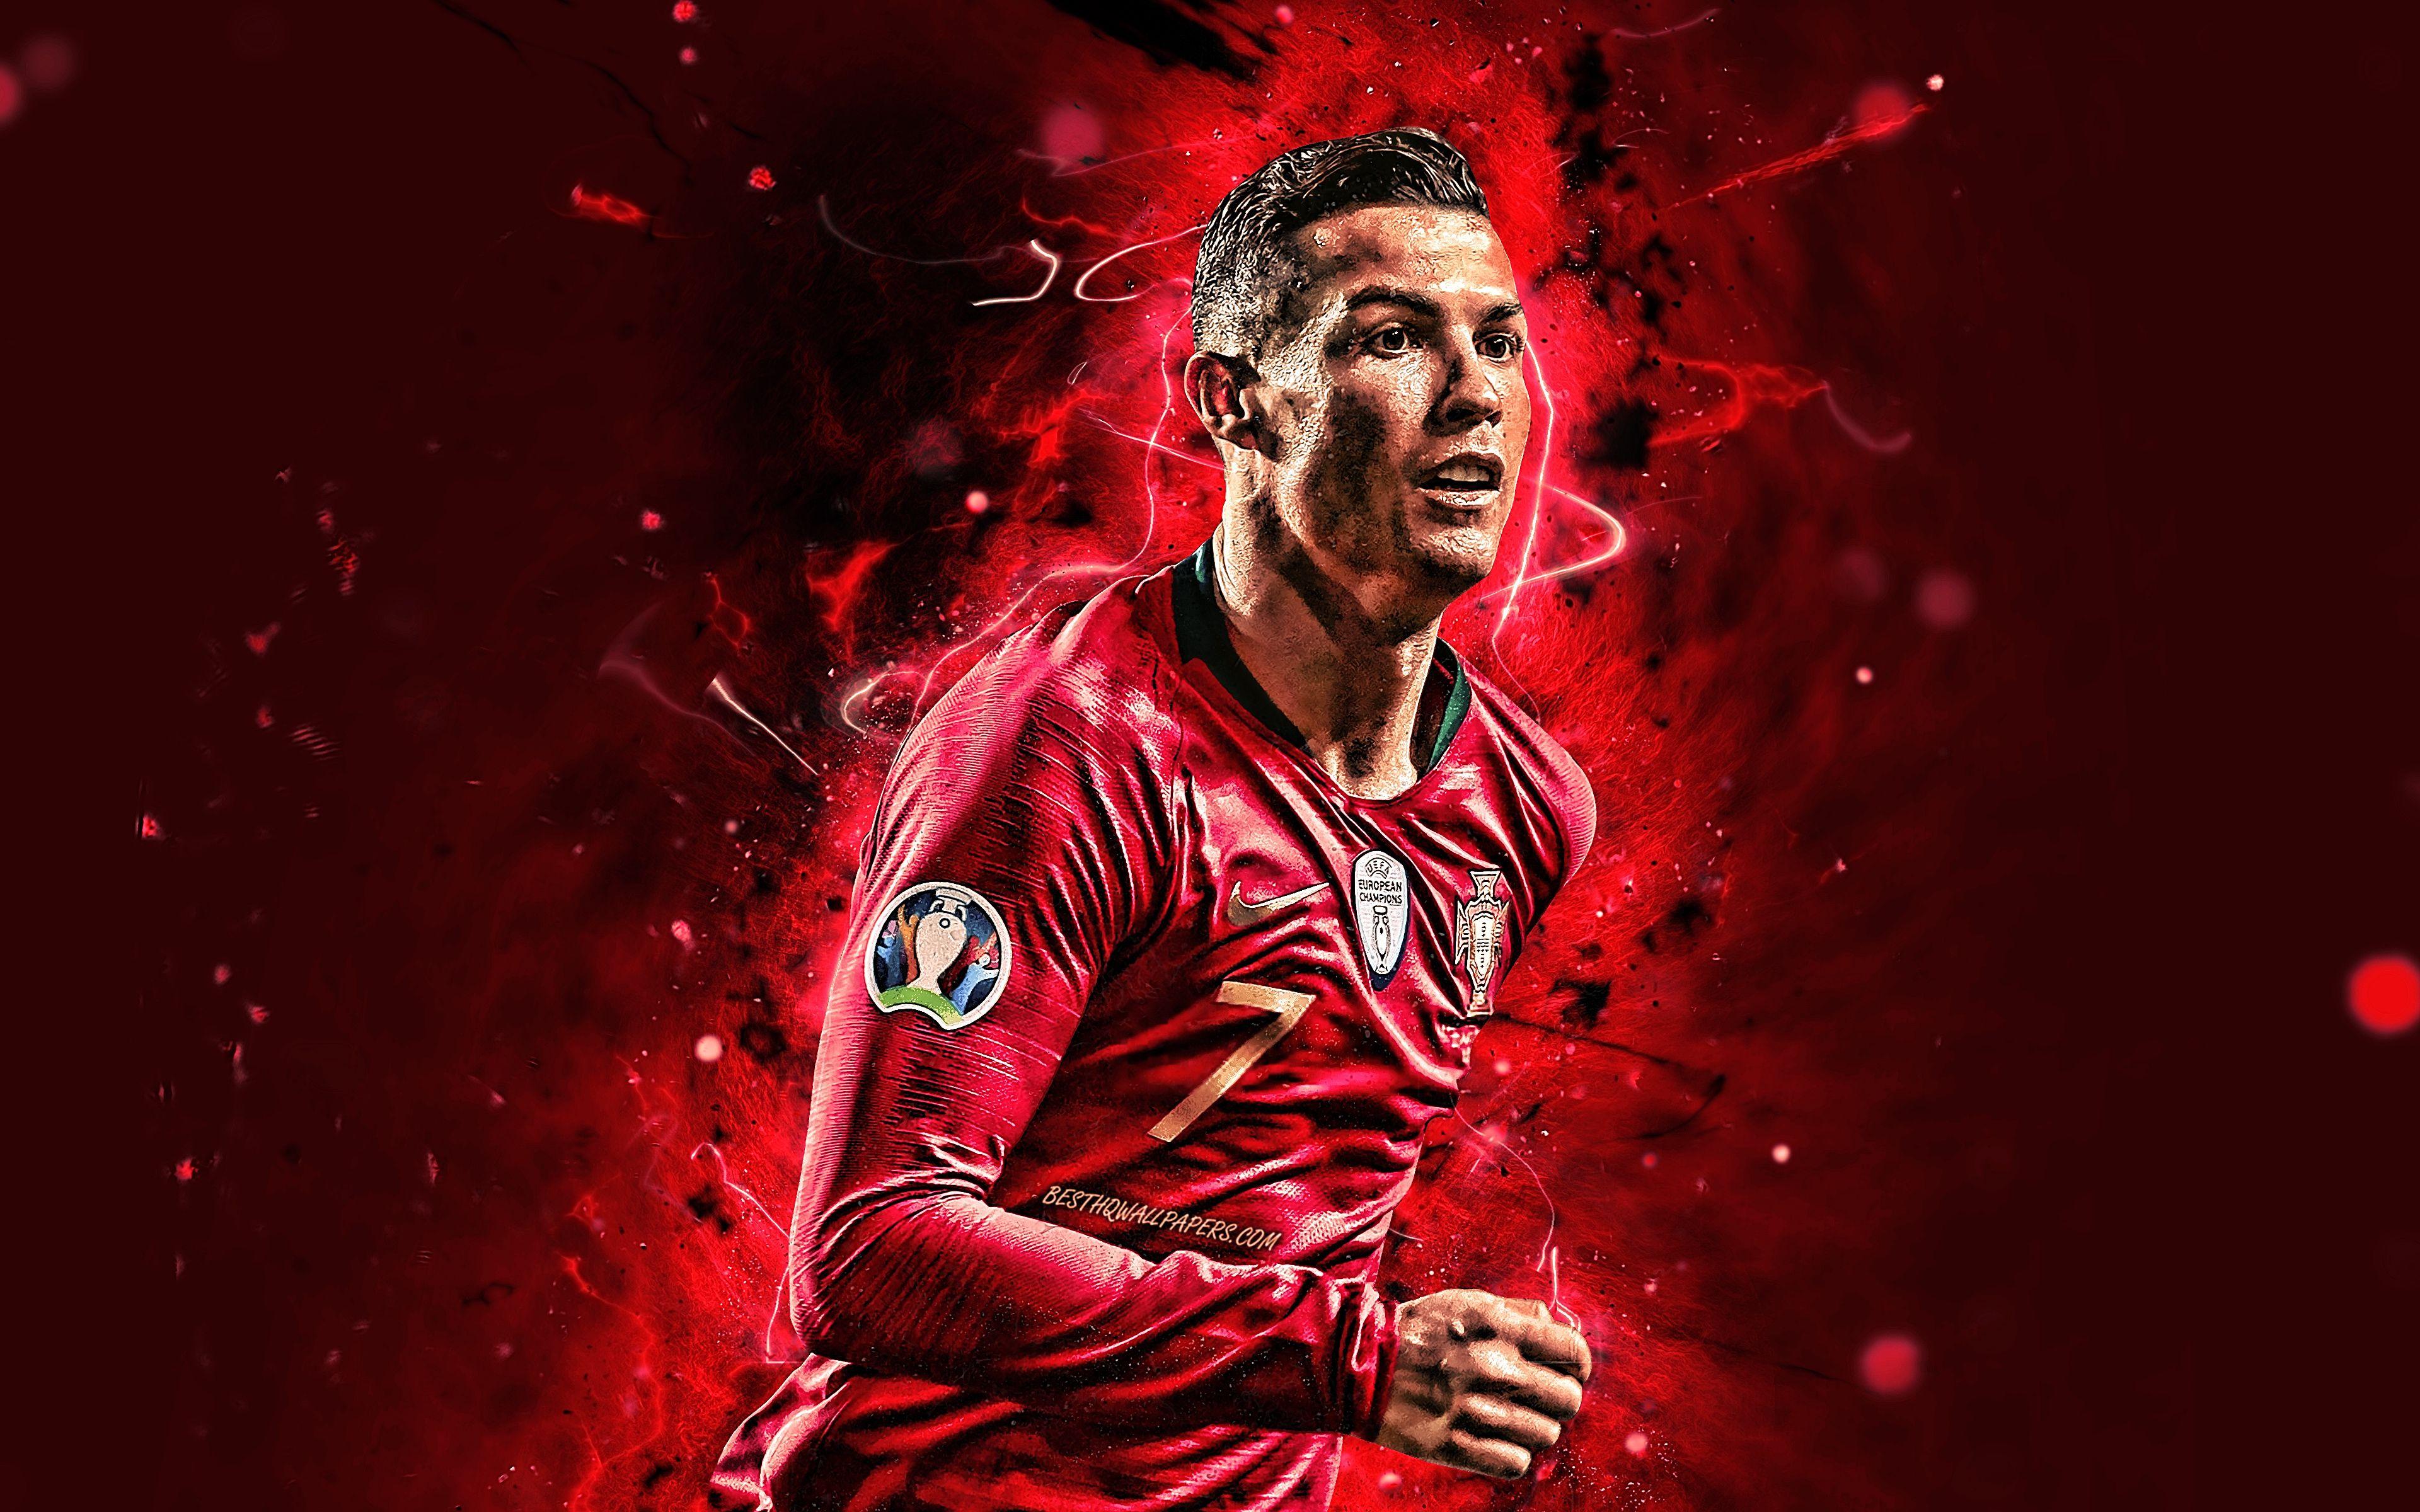 Ronaldo iPhone Wallpapers Top 25 Best Ronaldo iPhone Wallpapers  Getty  Wallpapers